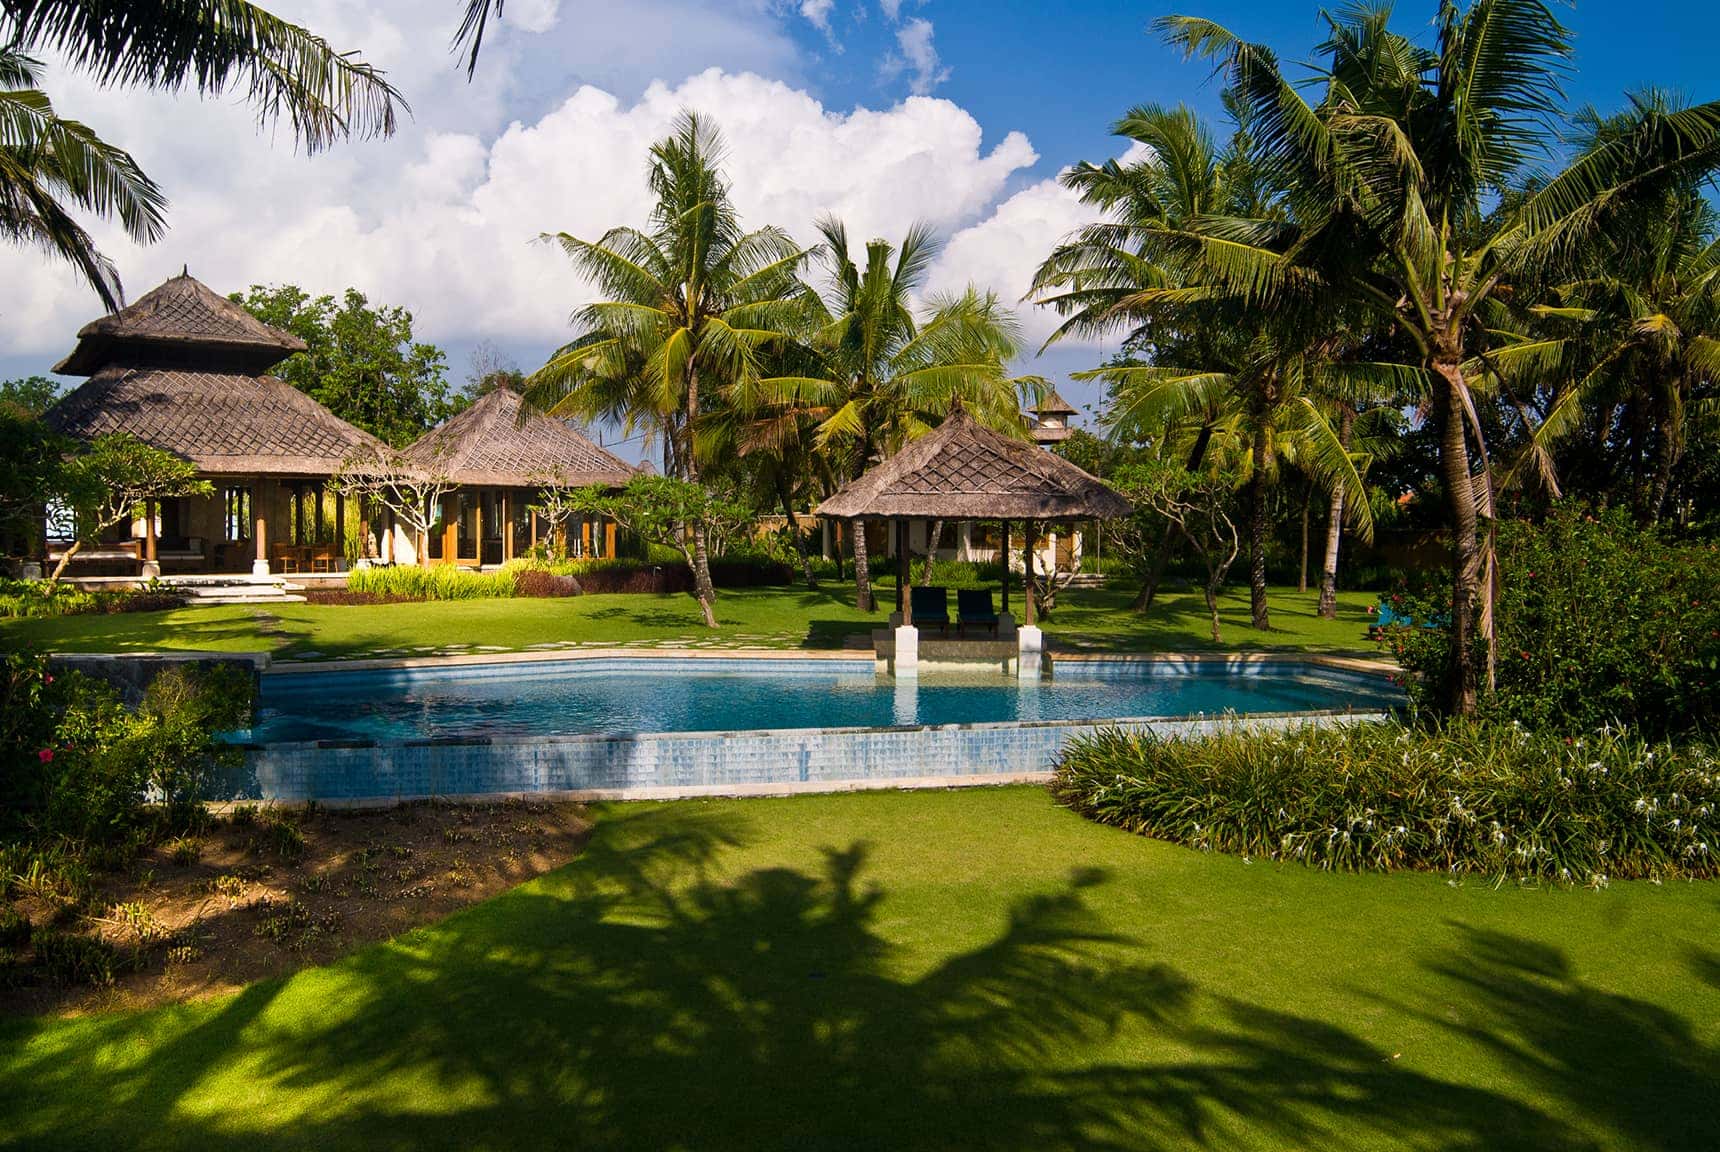 Villa Arika - Echo Beach, Bali Indonesia (Bali villa photography by master photographer Rick Carmichael of LuxViz)